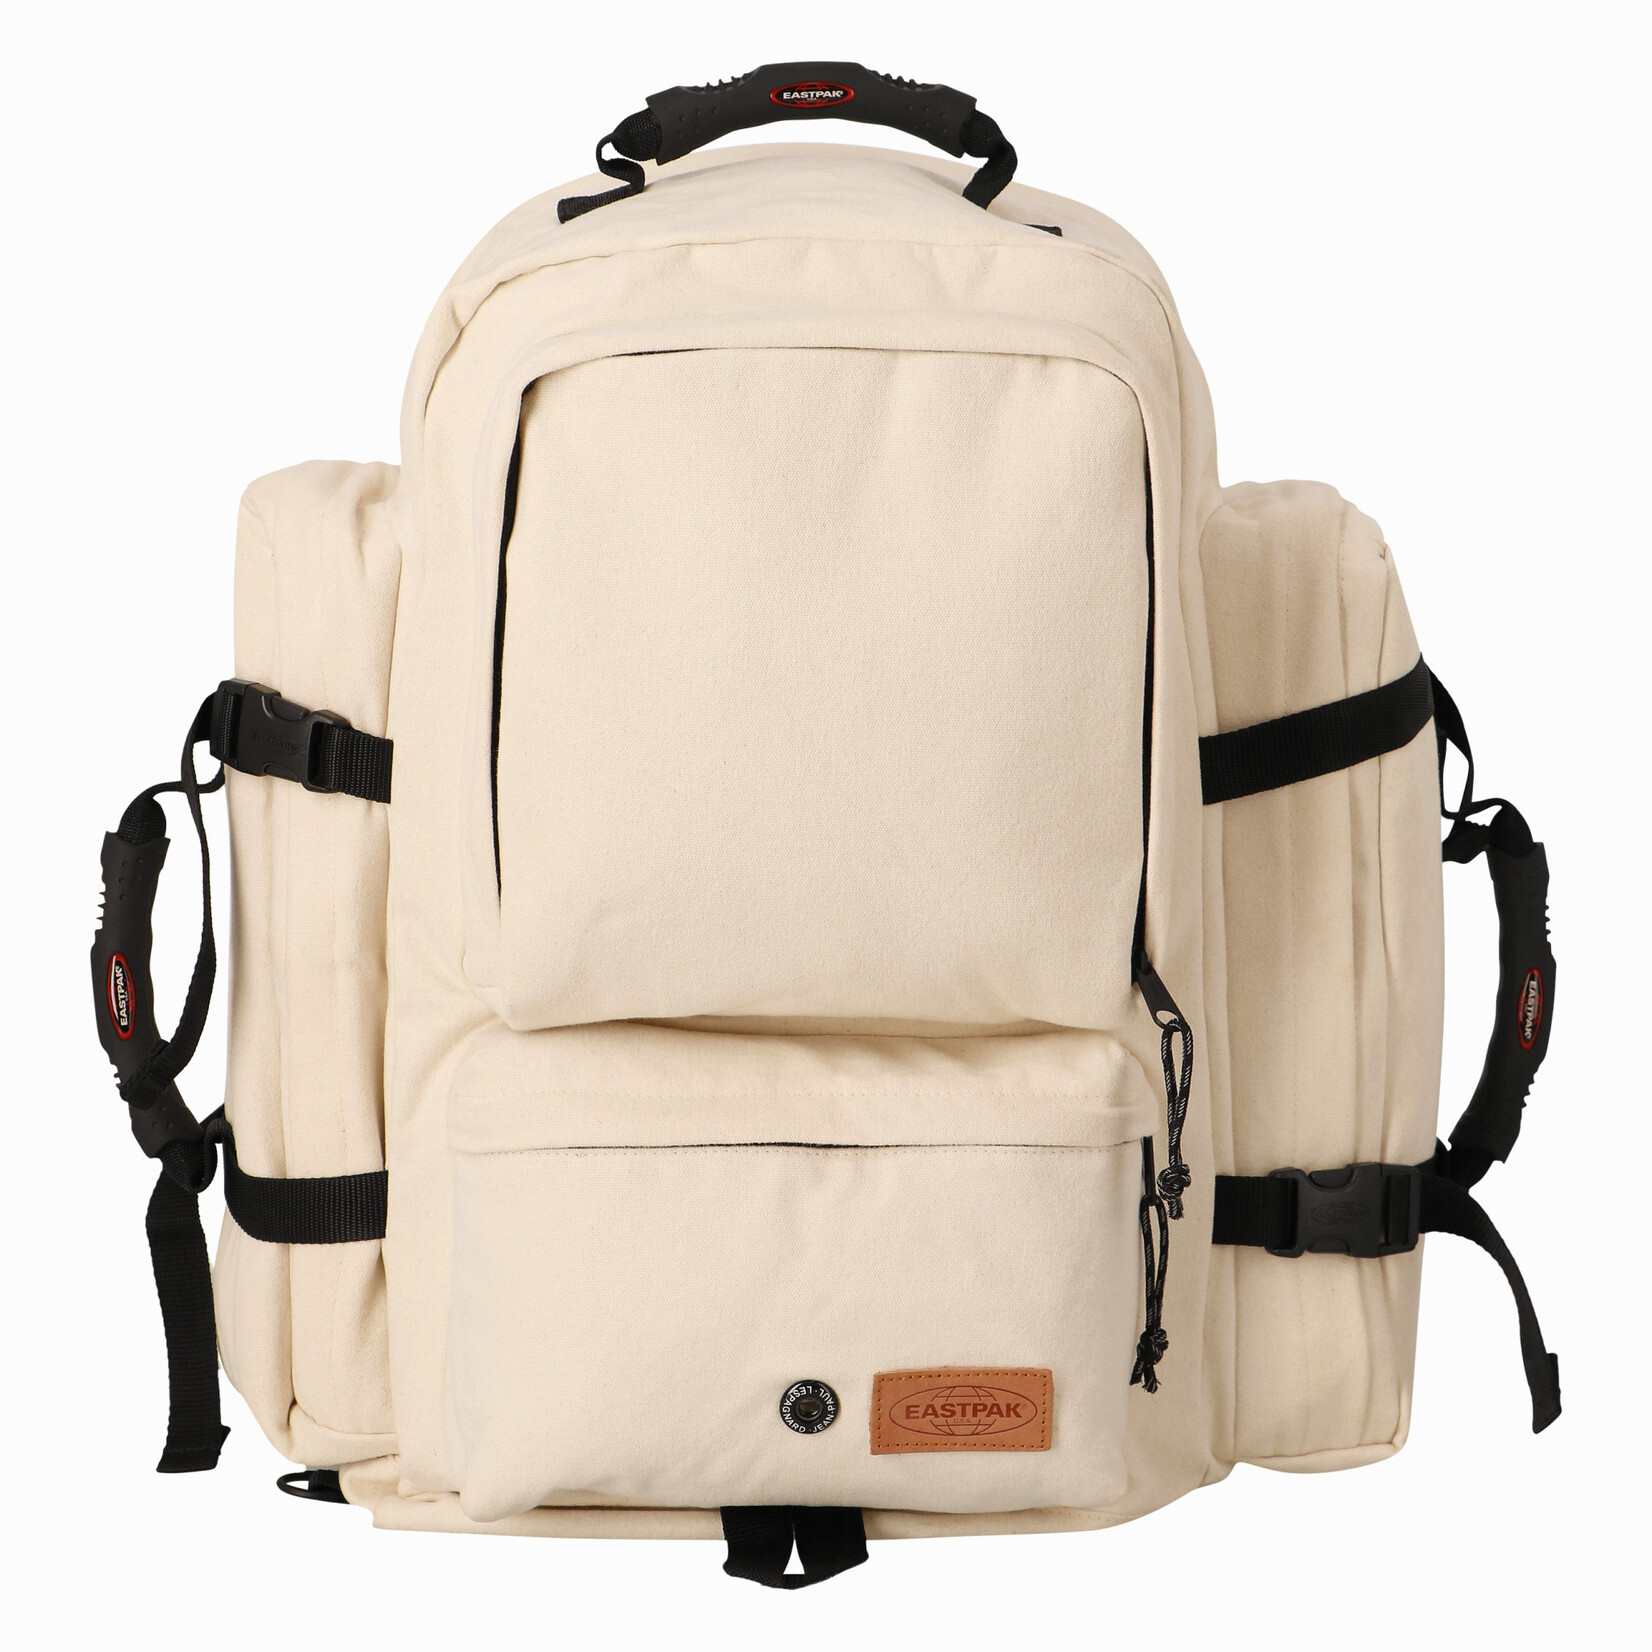 Jean-Paul Lespagnard Big Backpack, Off White & Natural Leather, Eastpak x Jean-Paul Lespagnard